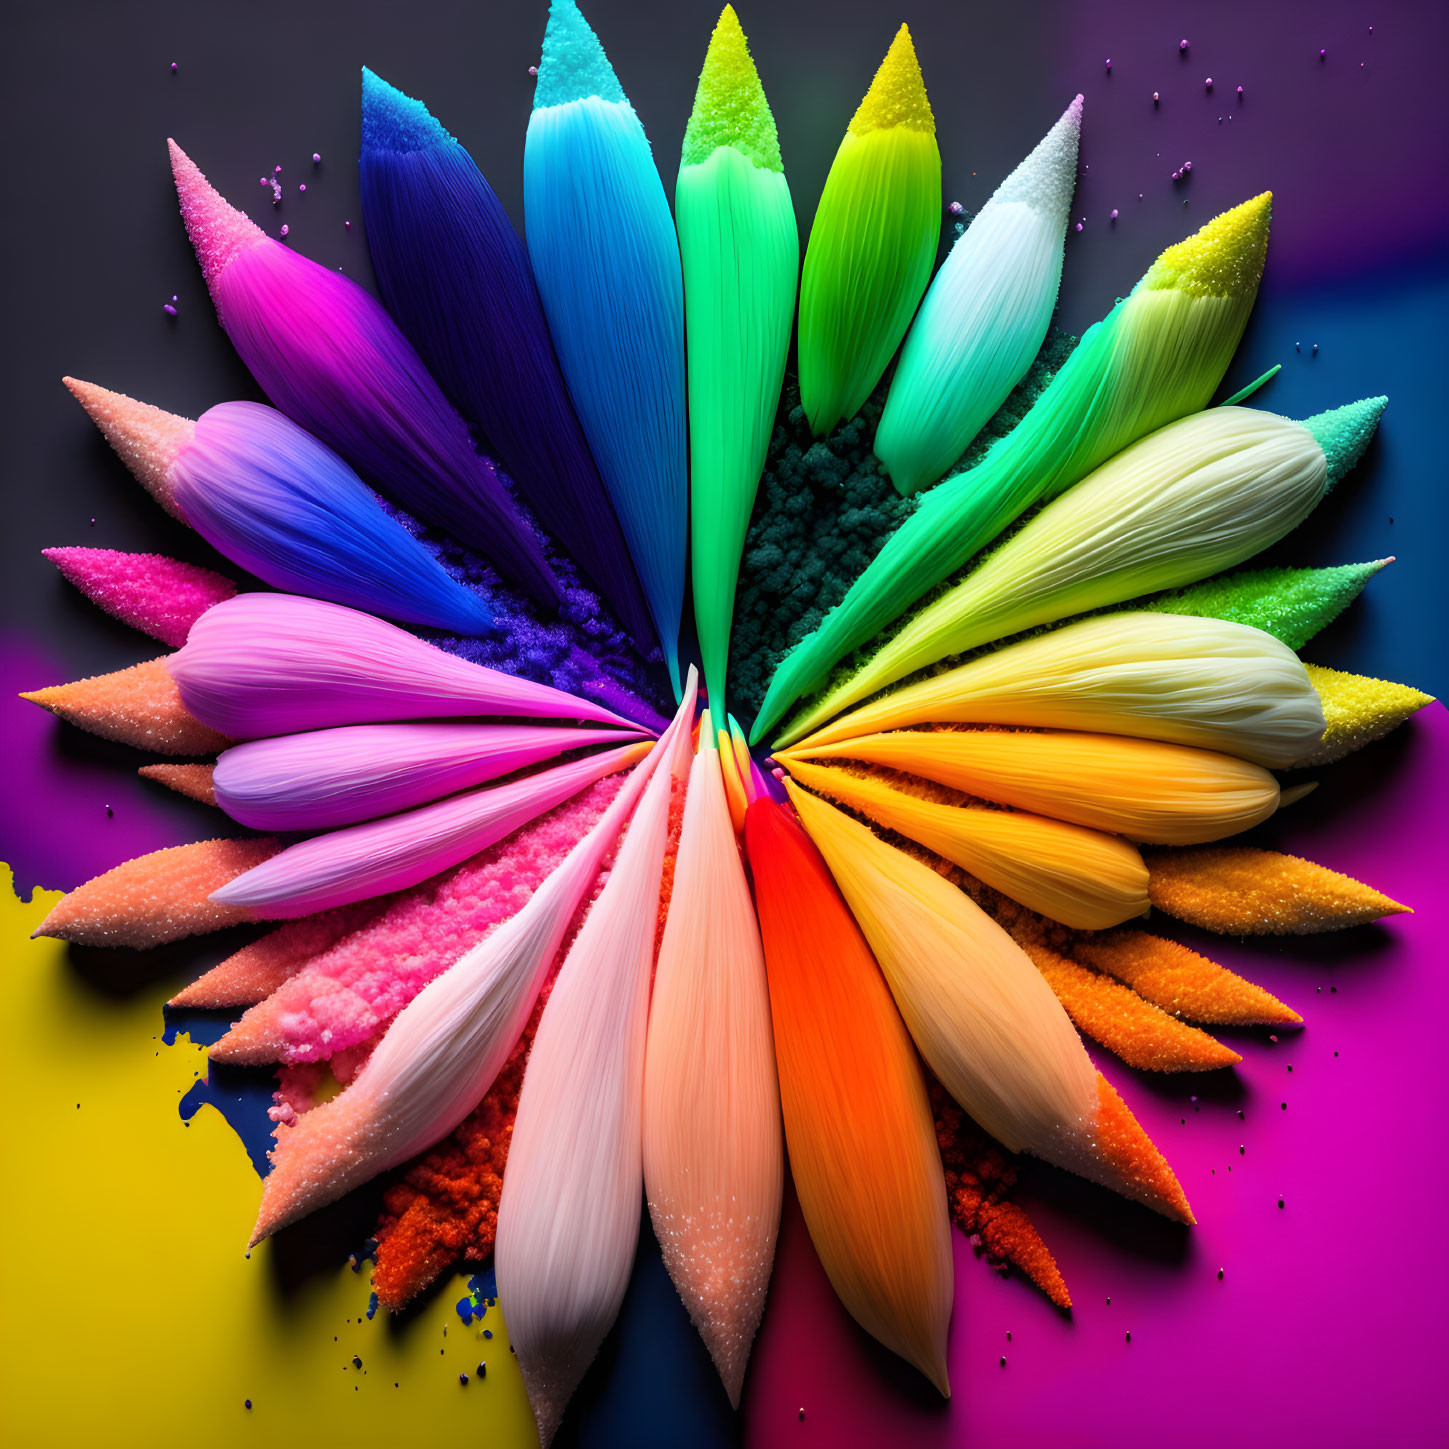 Colorful Flower Petals in Circular Arrangement on Dark Background